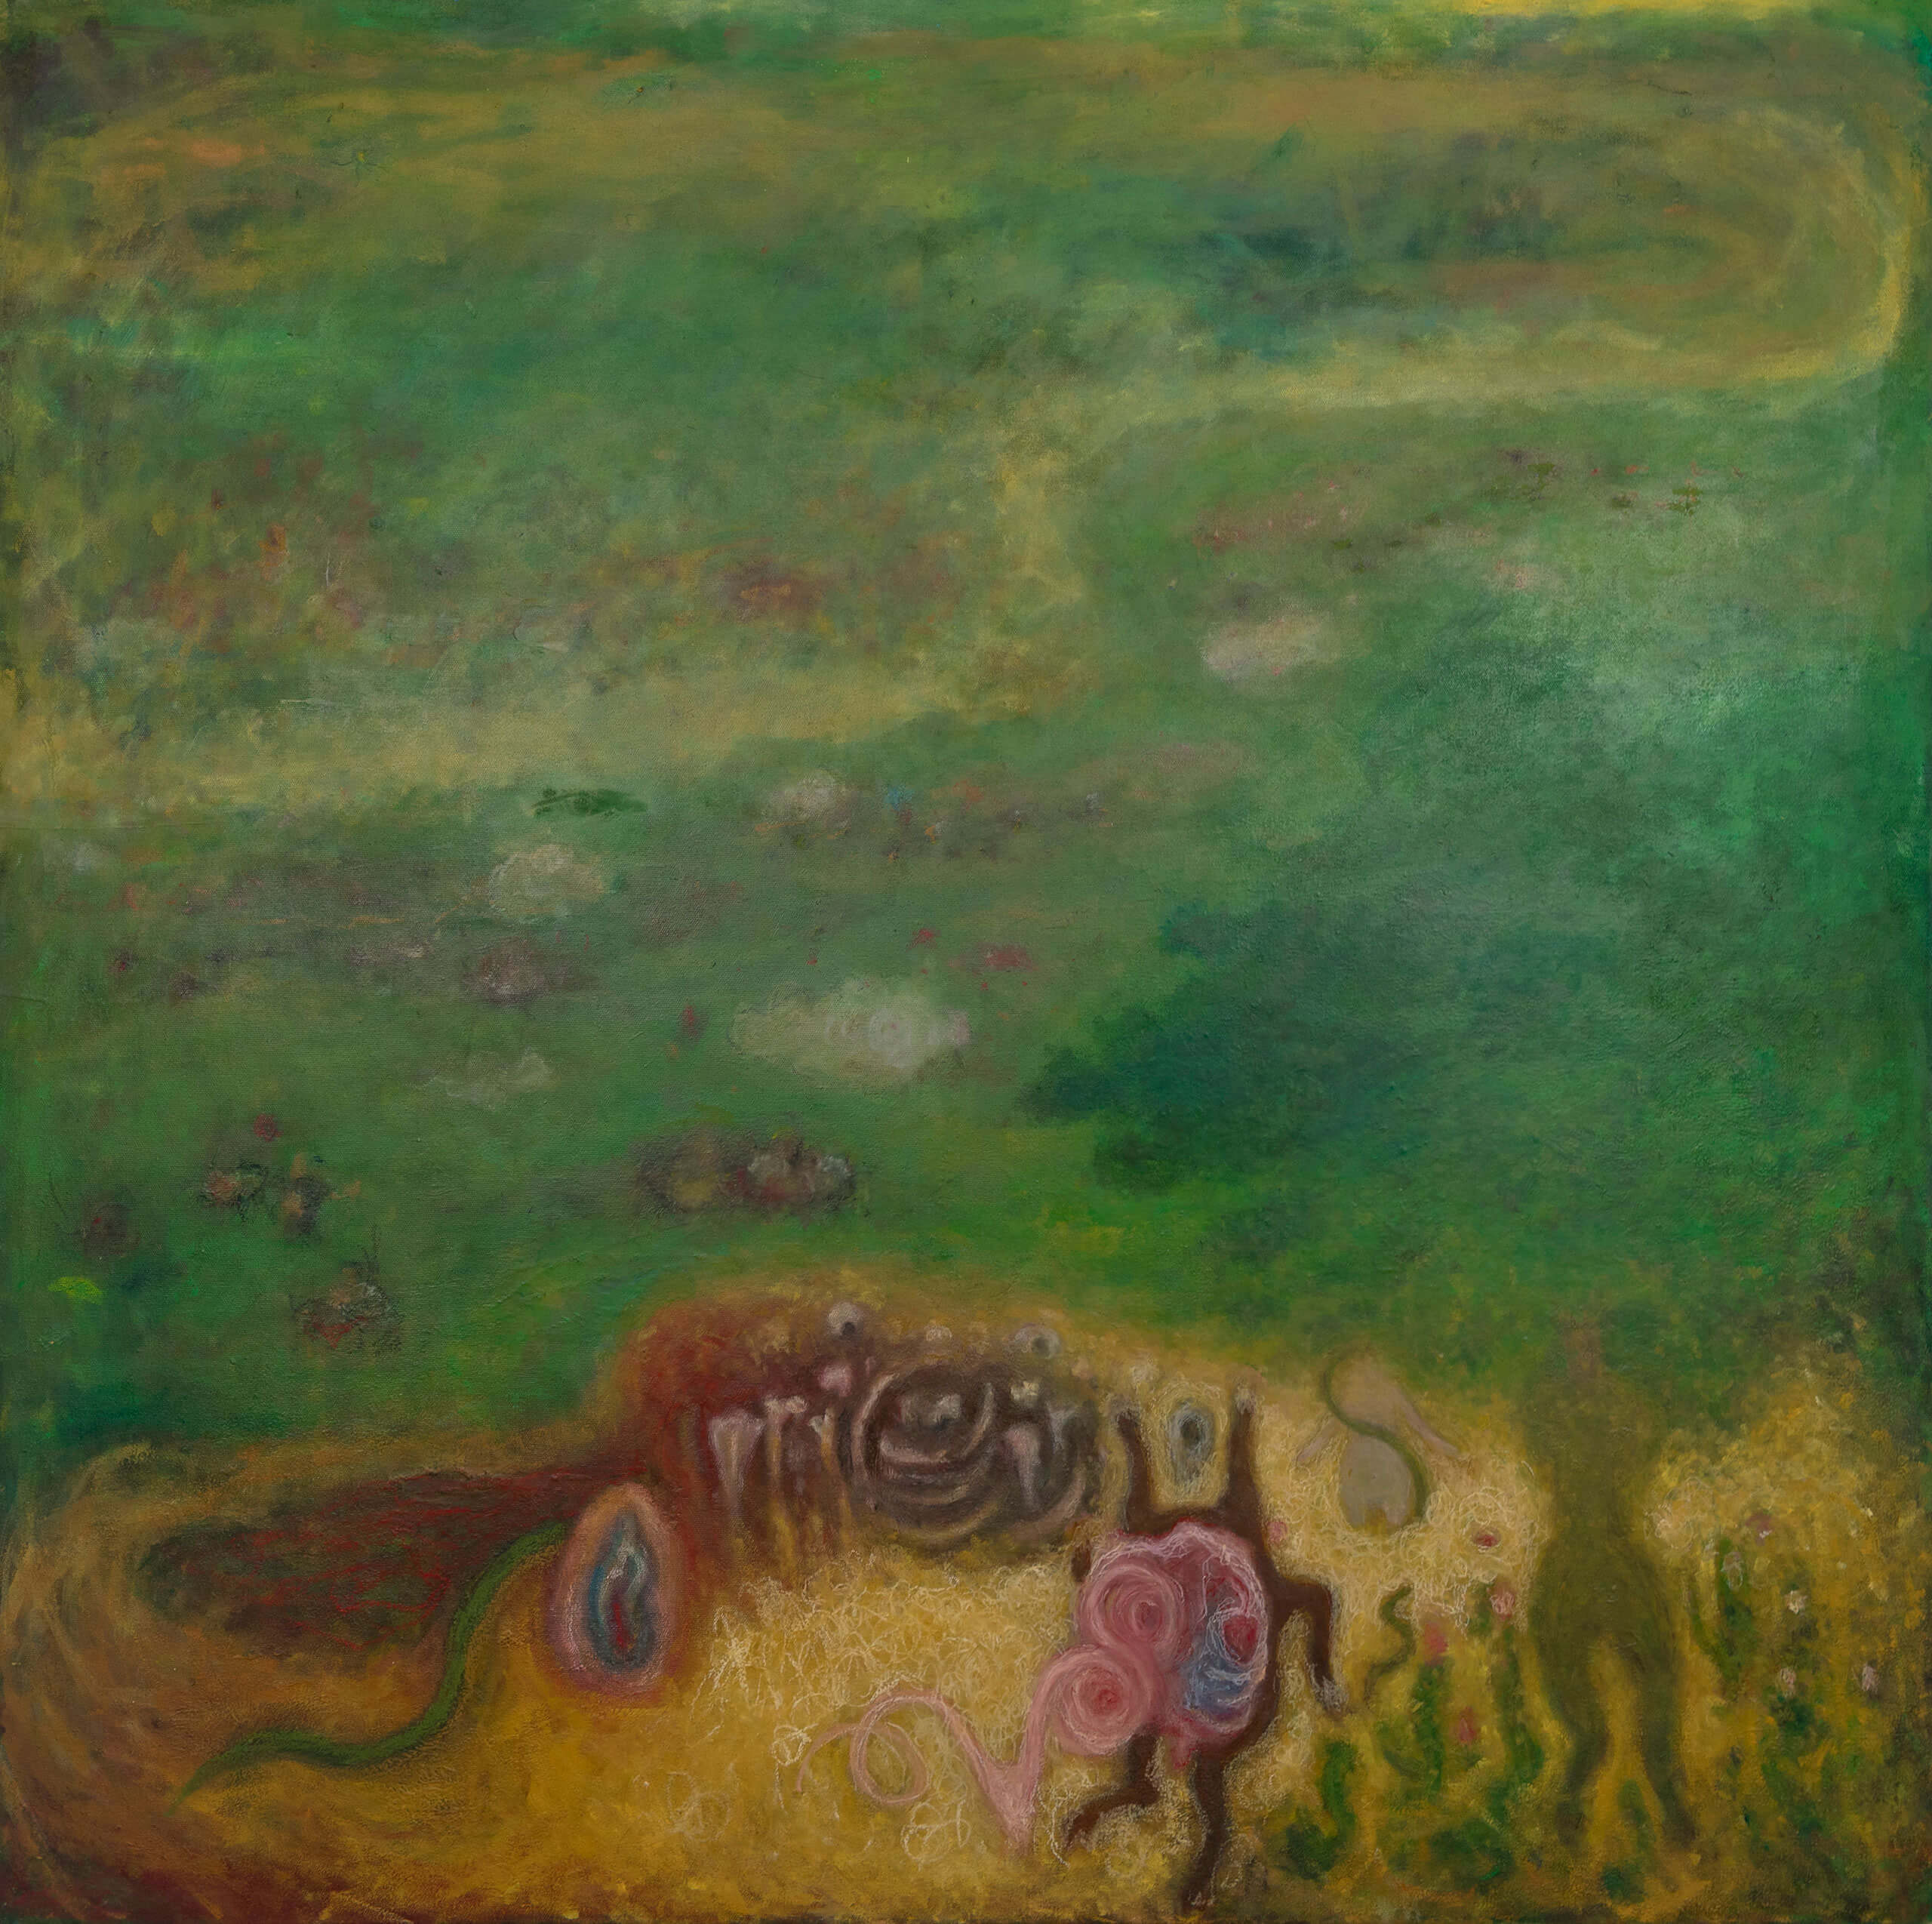 Unnatural instinct, Oil on canvas, 2021, 135 x 135 cm